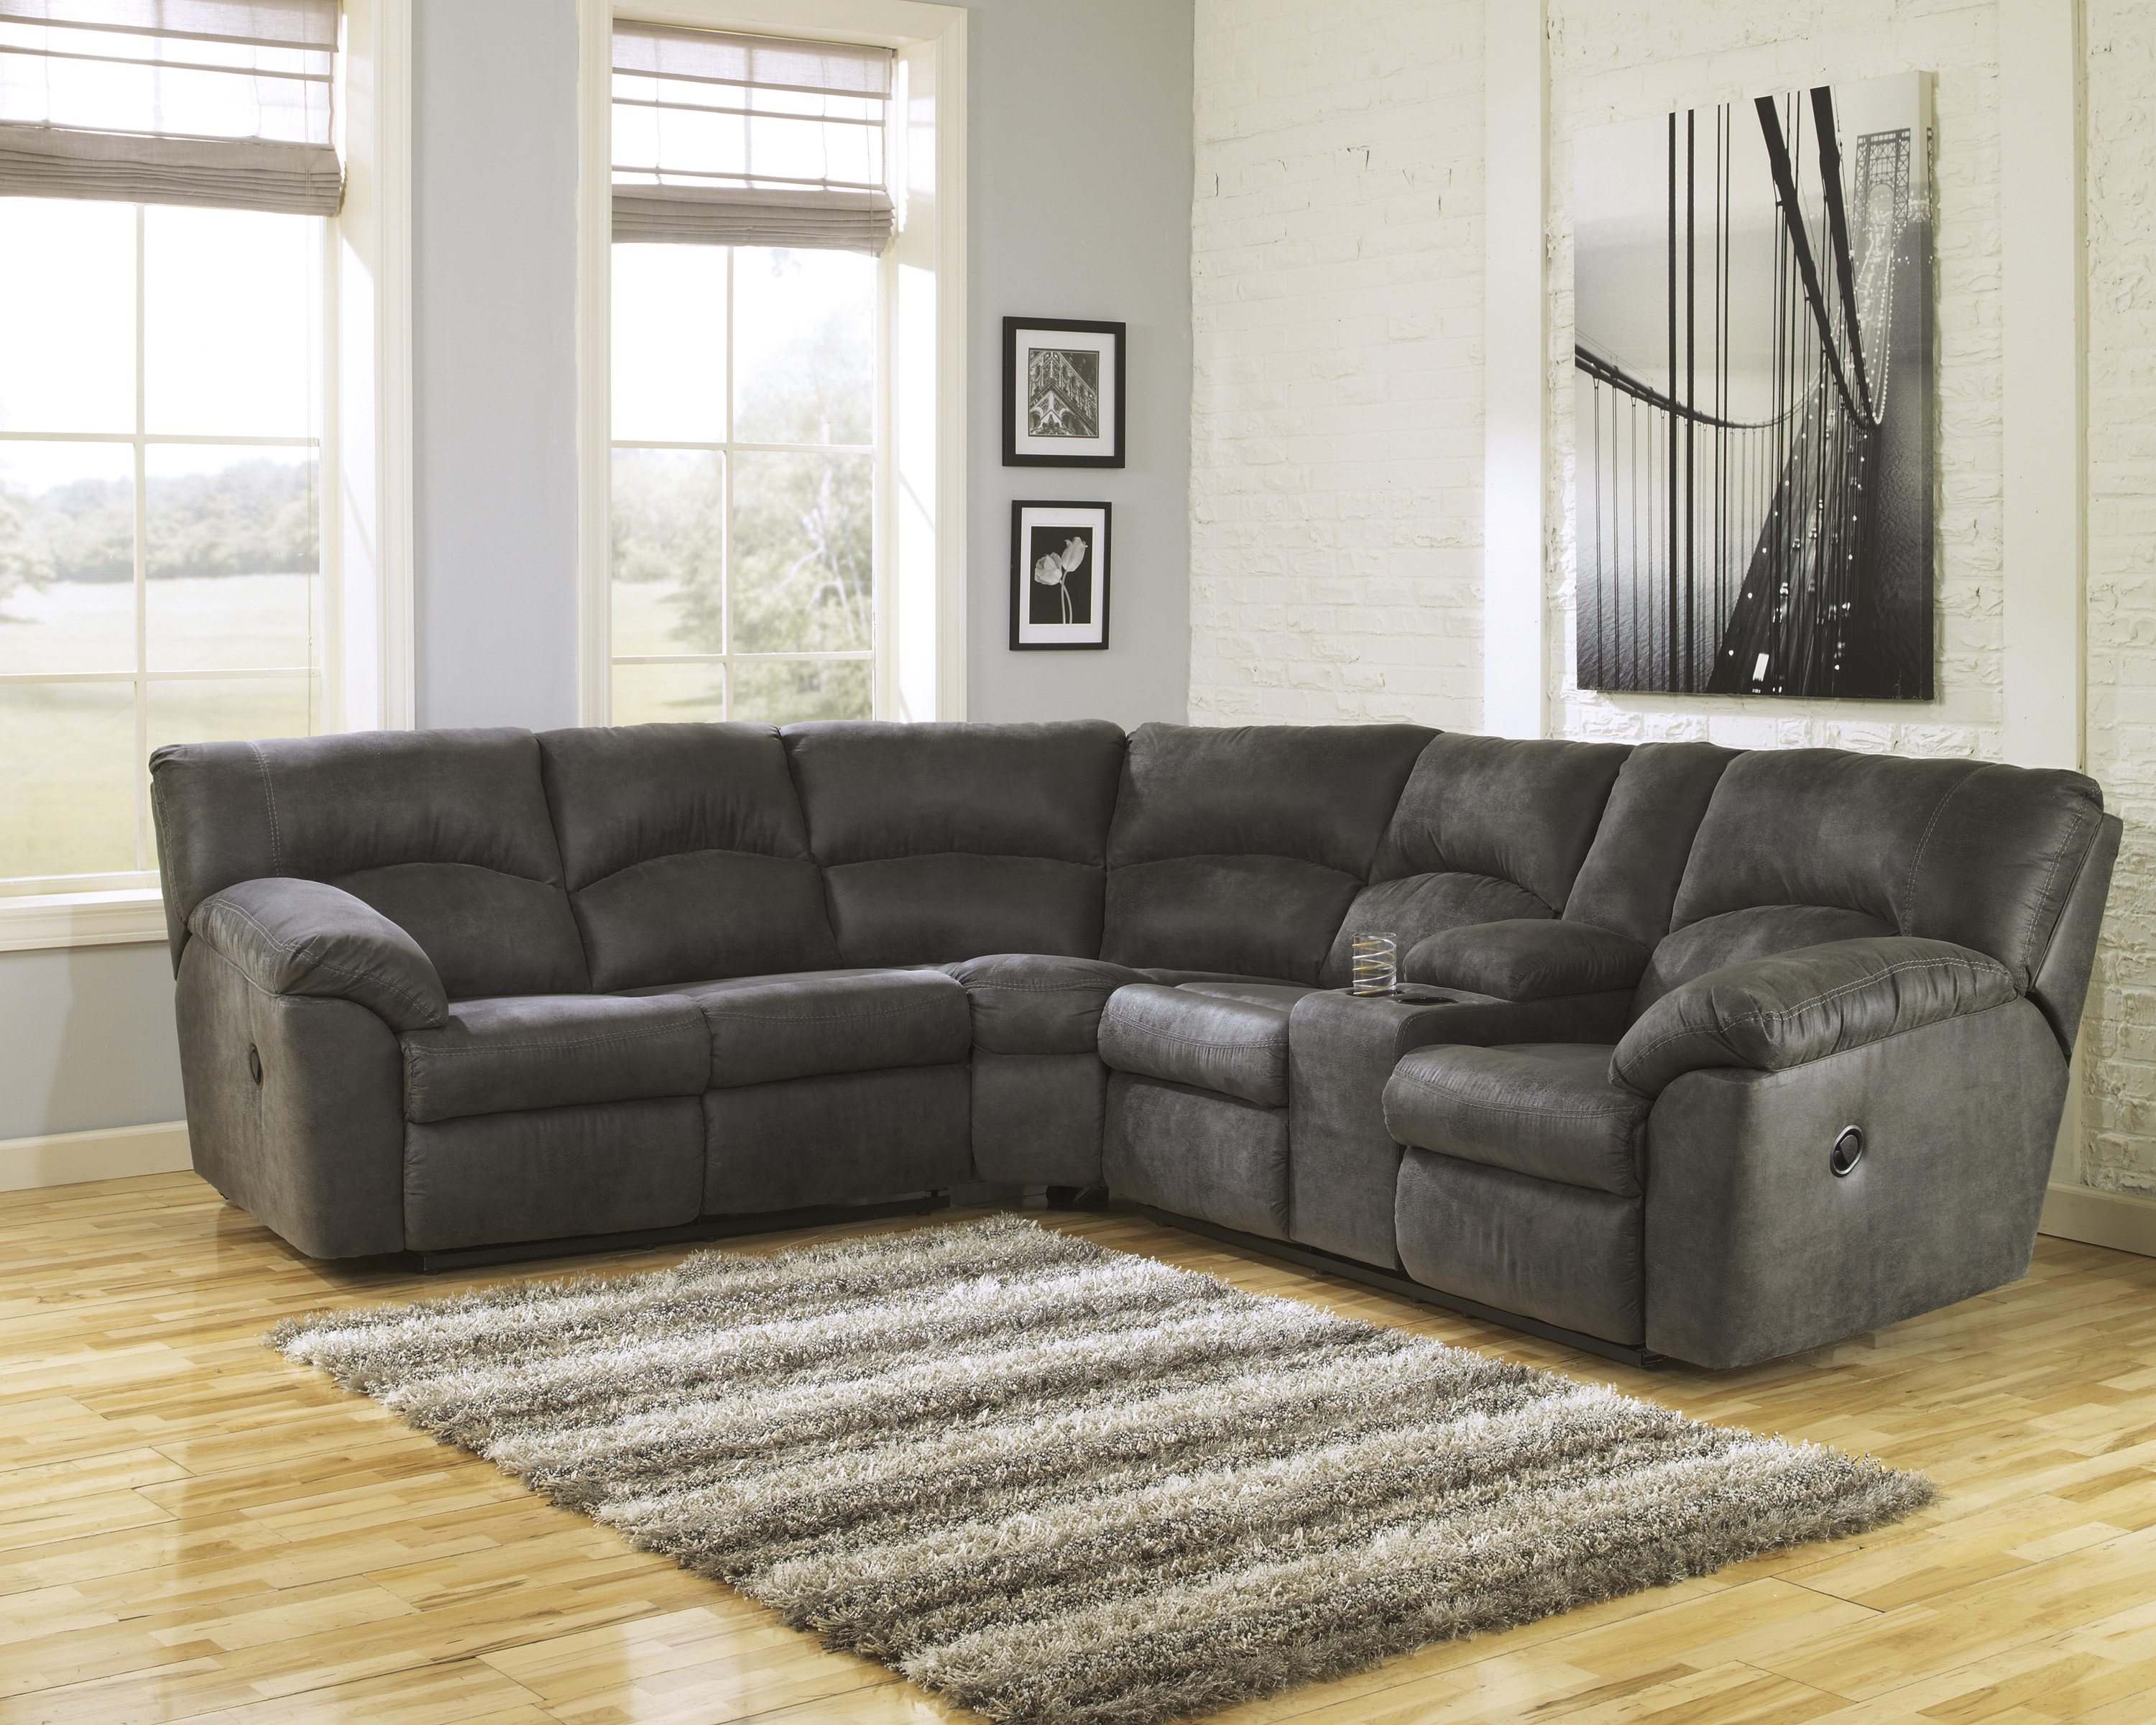 Furniturema Tambo Contemporary Pewter, Reclining Sectional Sofa Microfiber